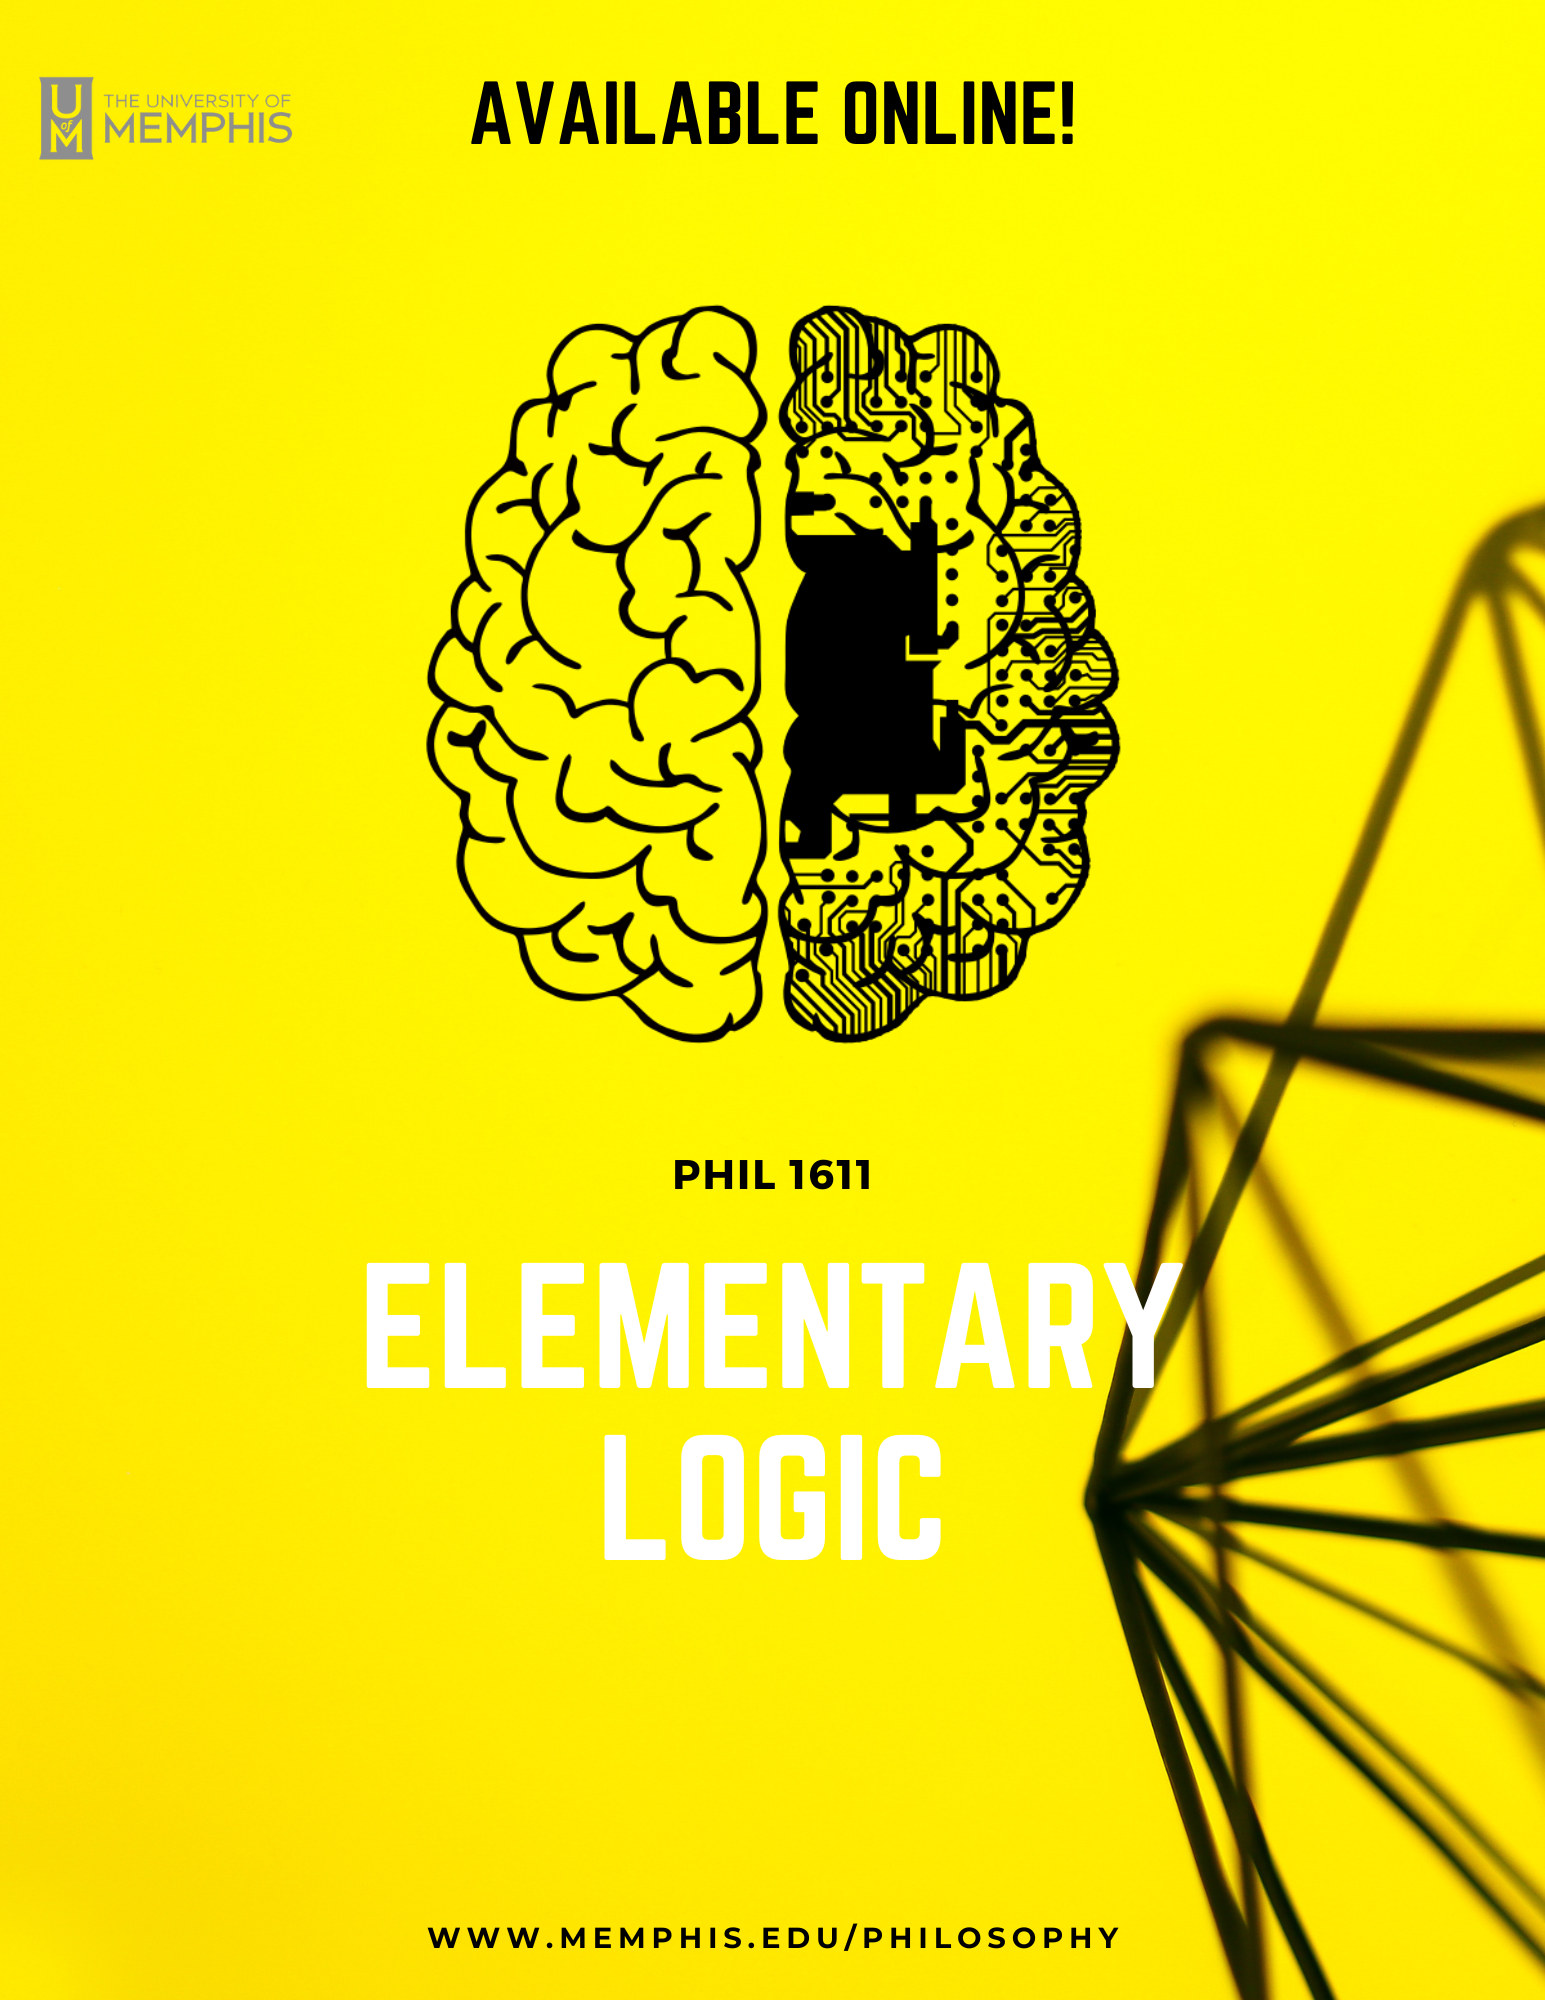 Elementary Logic poster